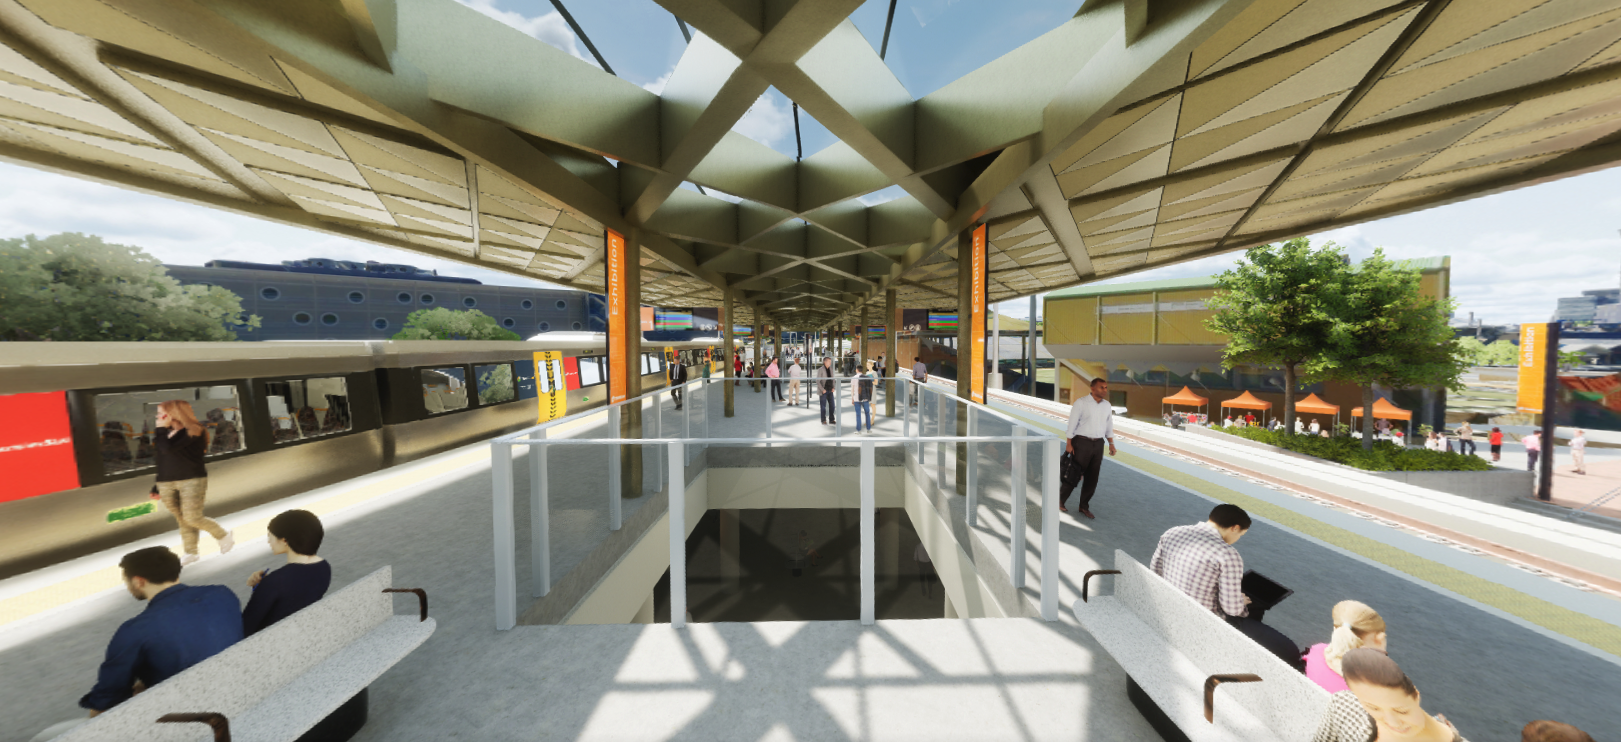 Platform level of the new station